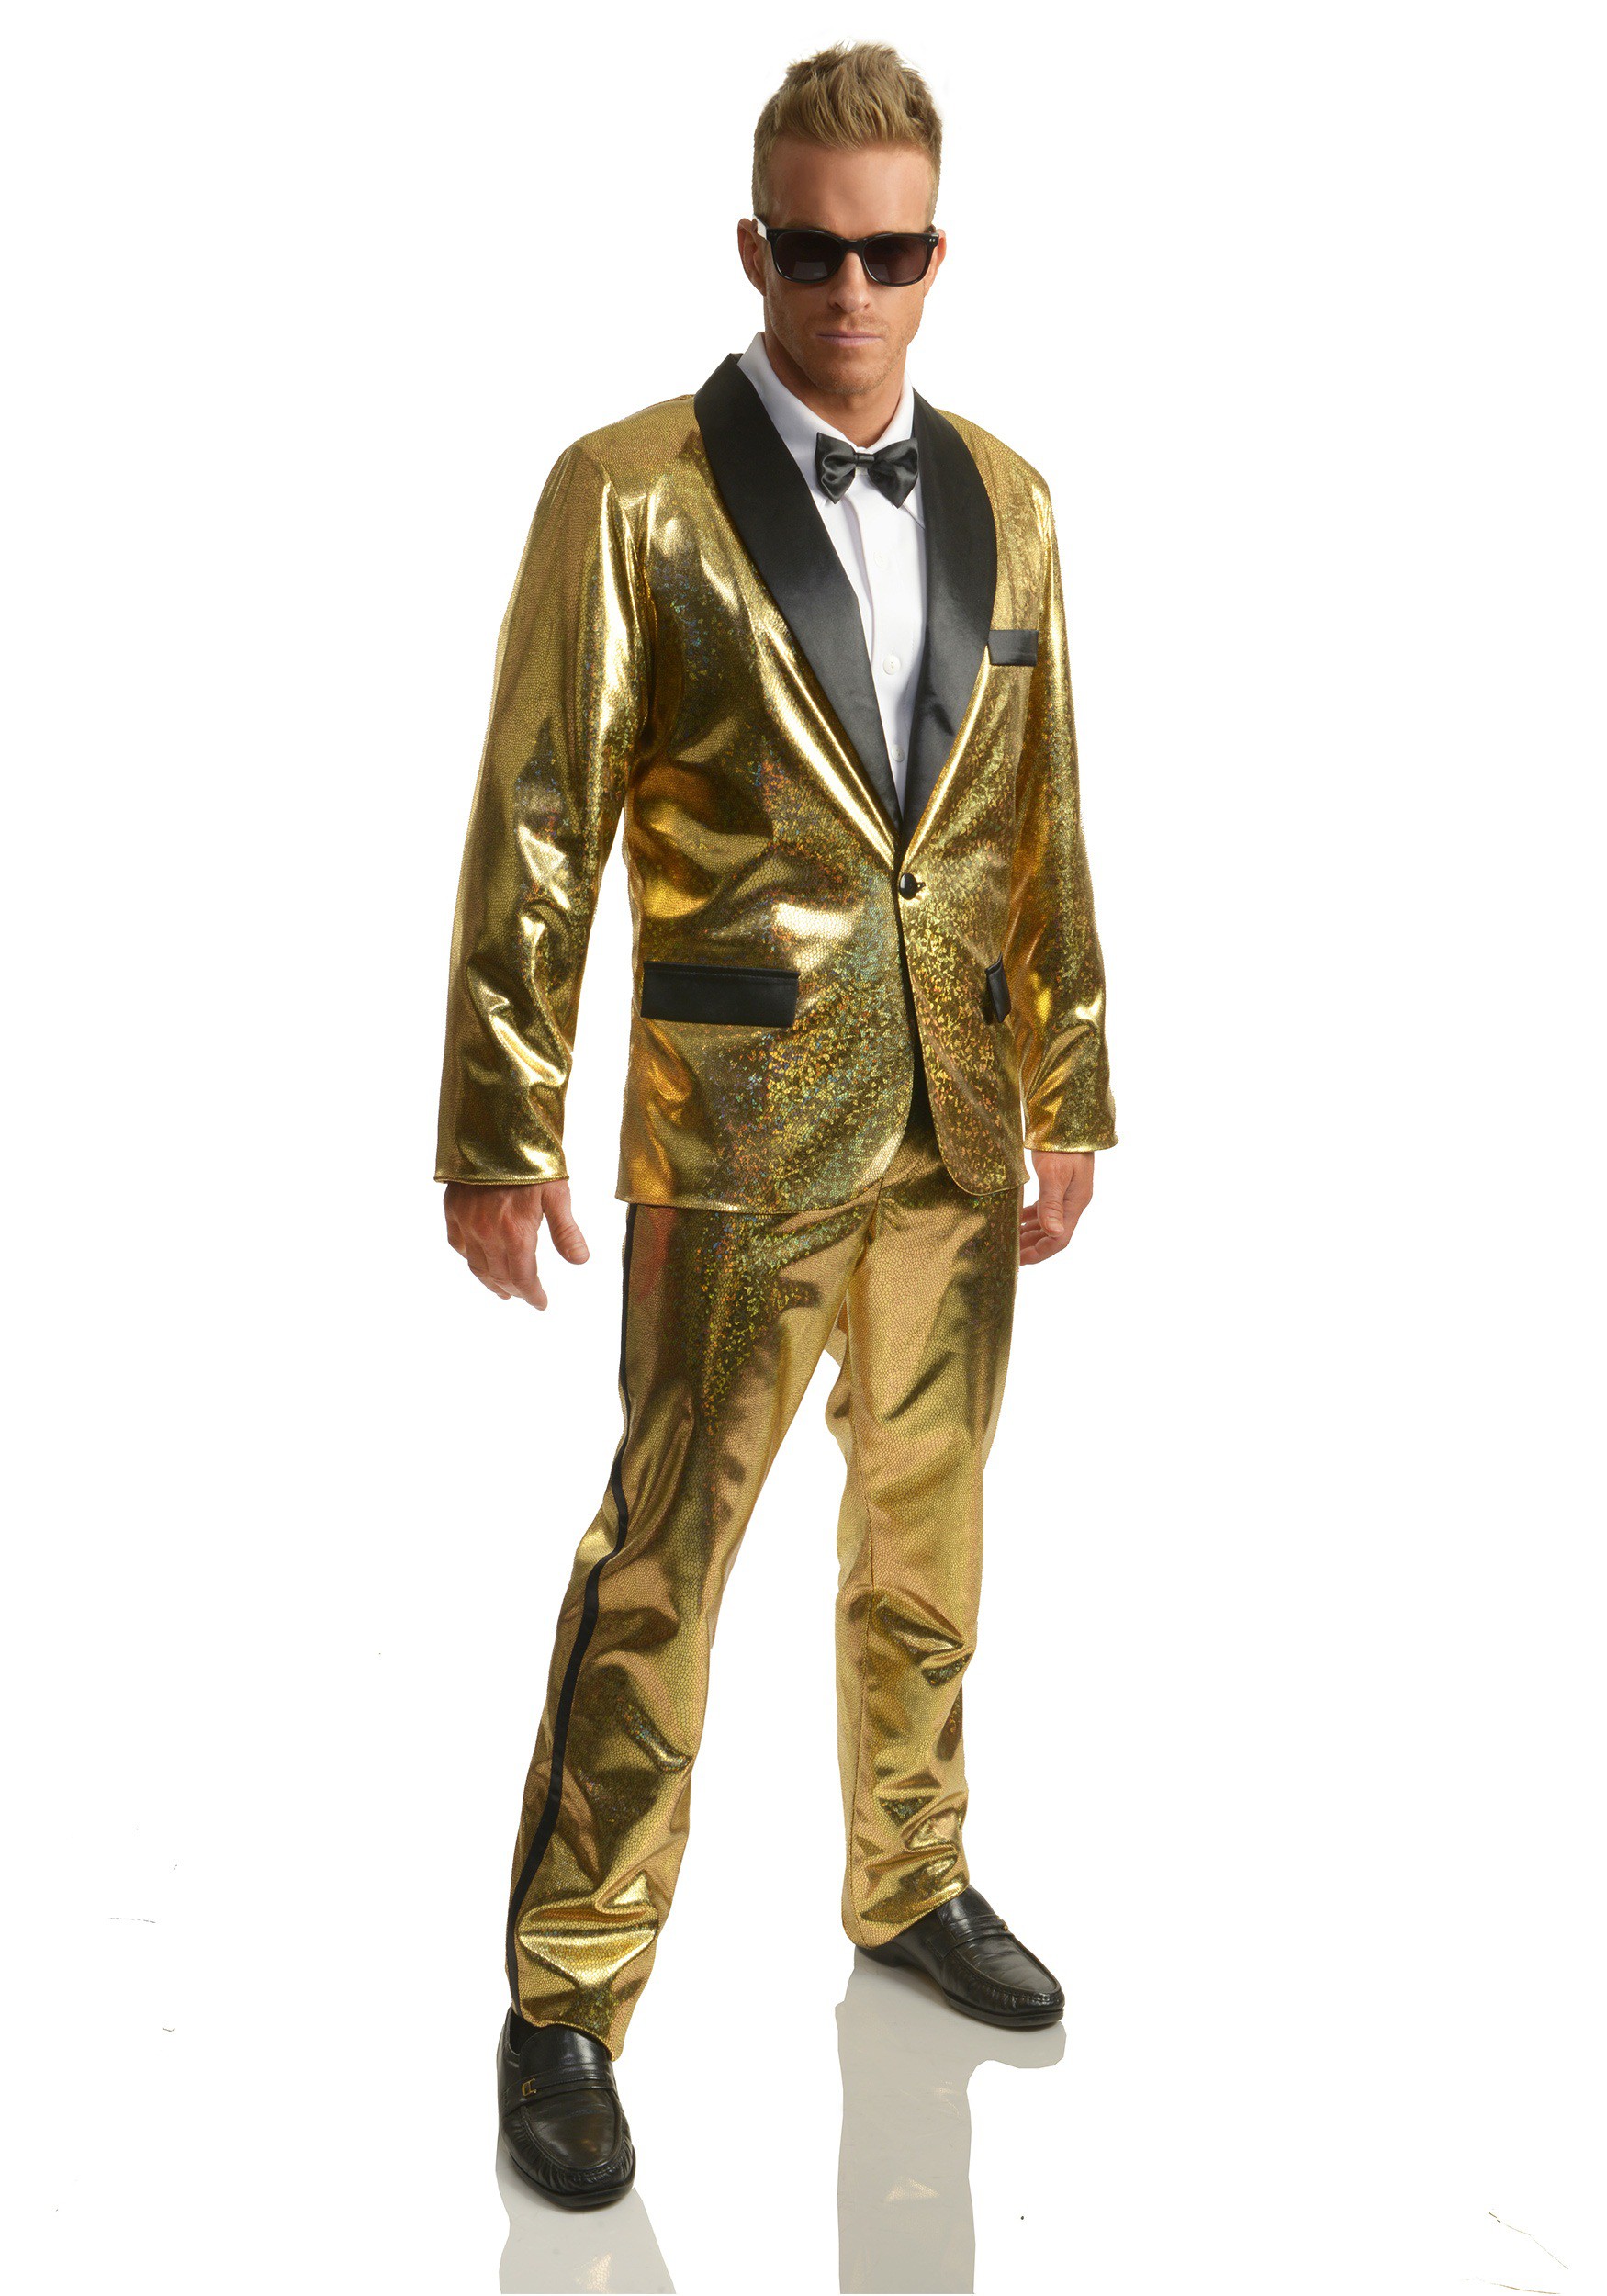 Image of Gold Disco Ball Tuxedo Men's Costume ID CH03121BVGD-M